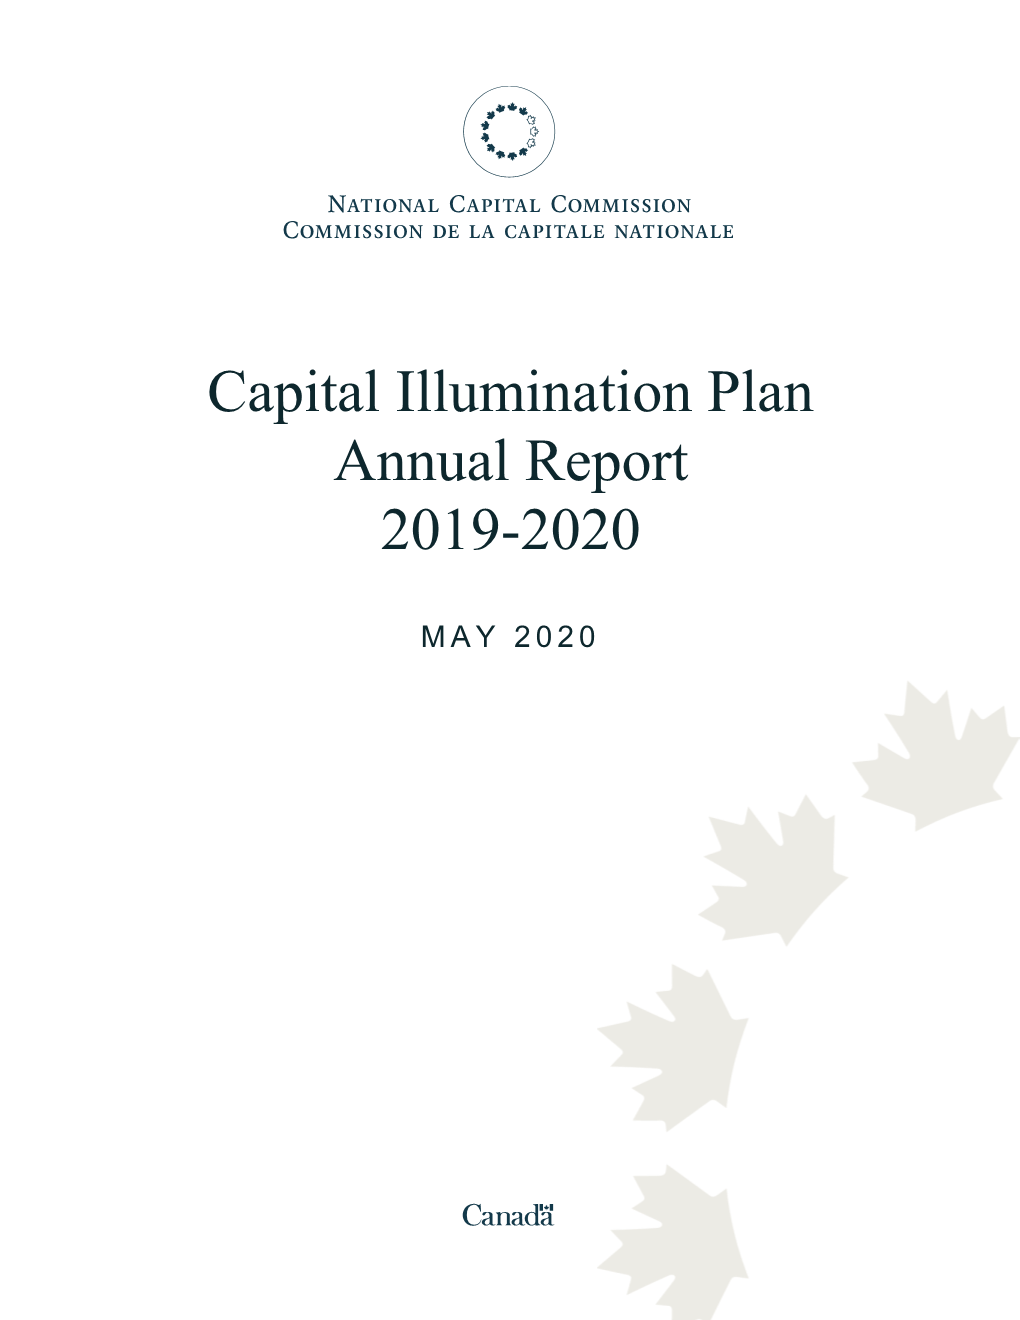 Capital Illumination Plan Annual Report 2019-2020